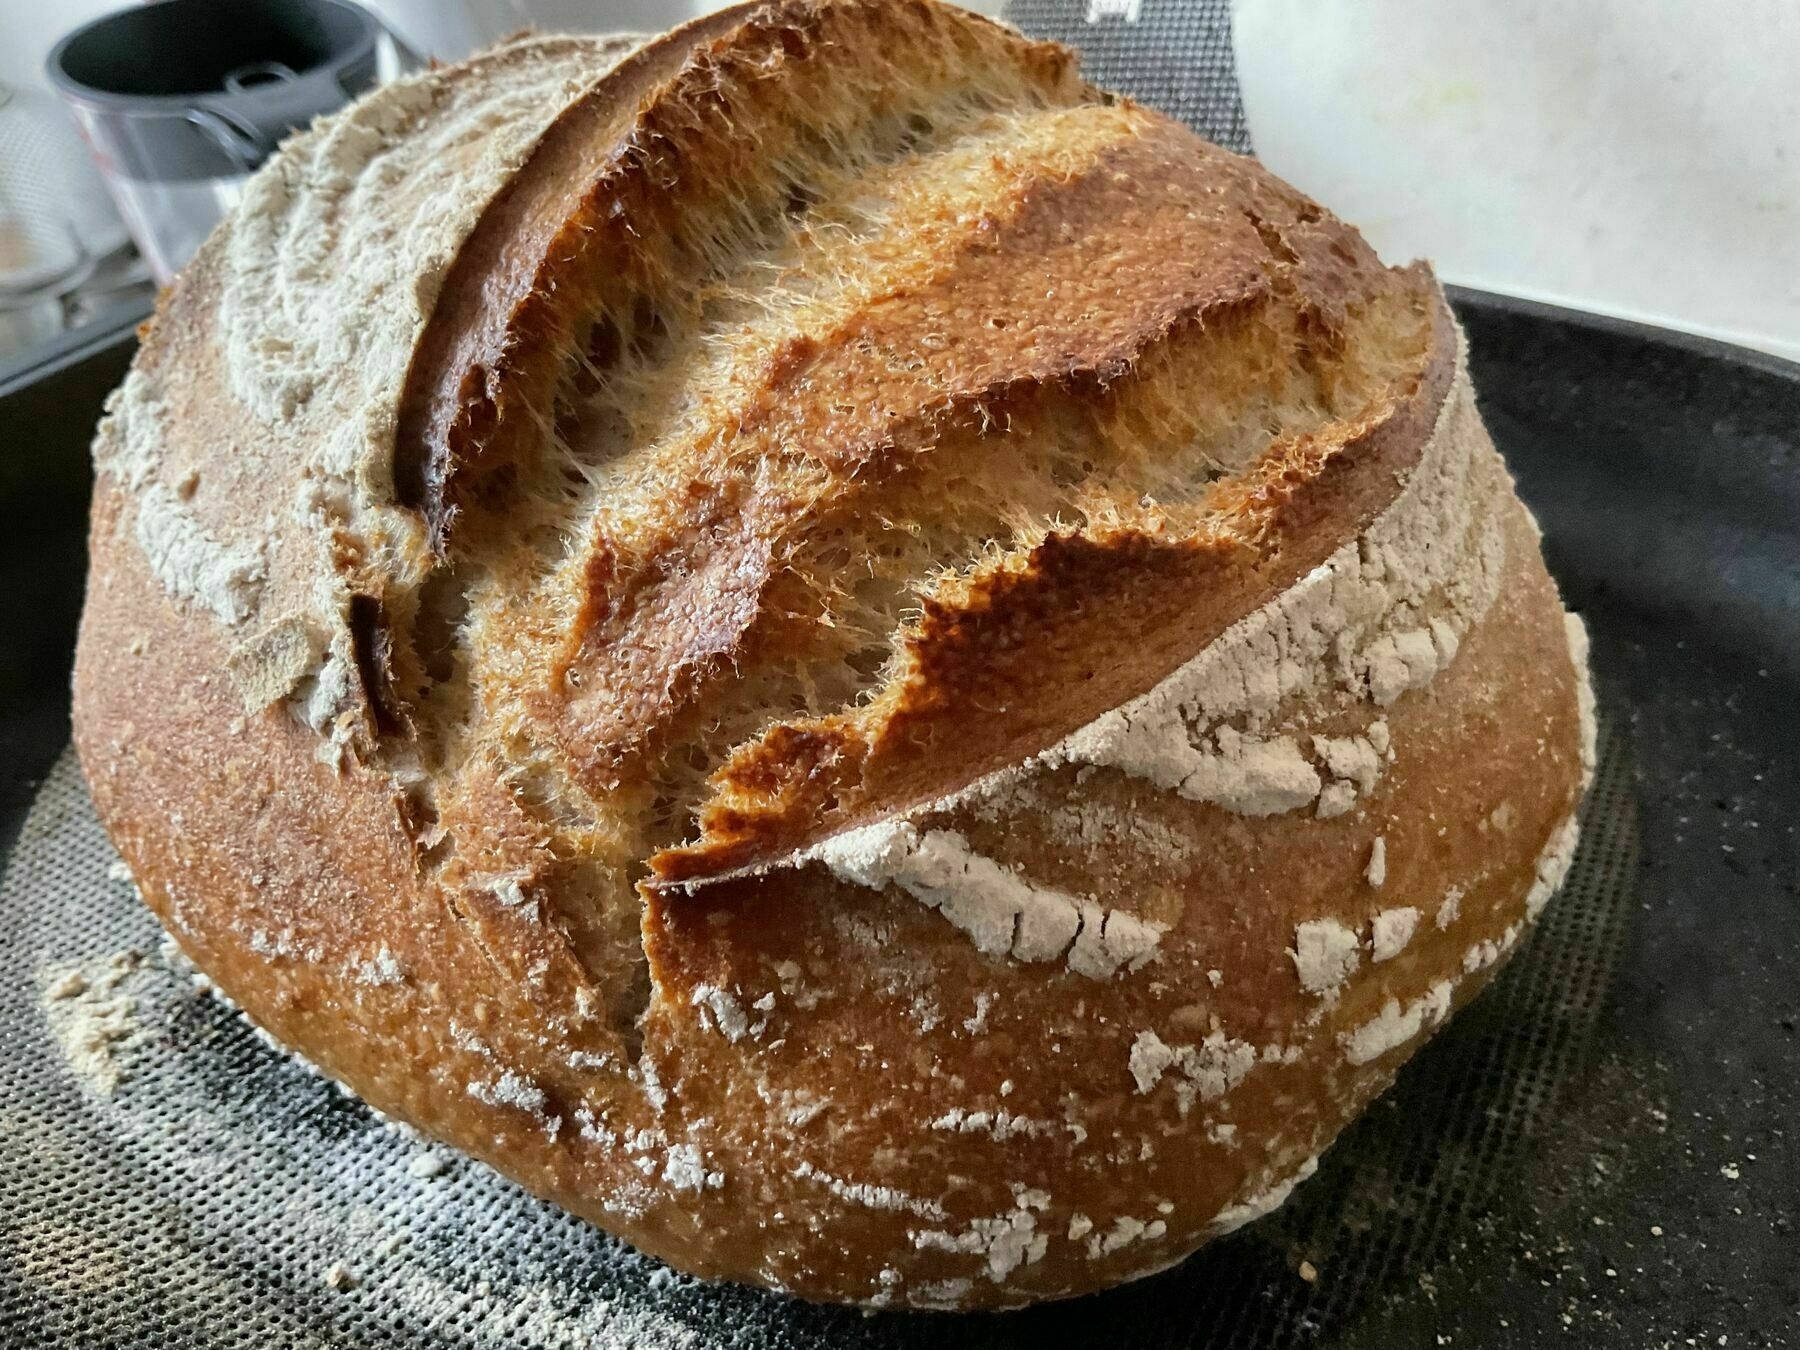 A freshly baked loaf of sourdough bread